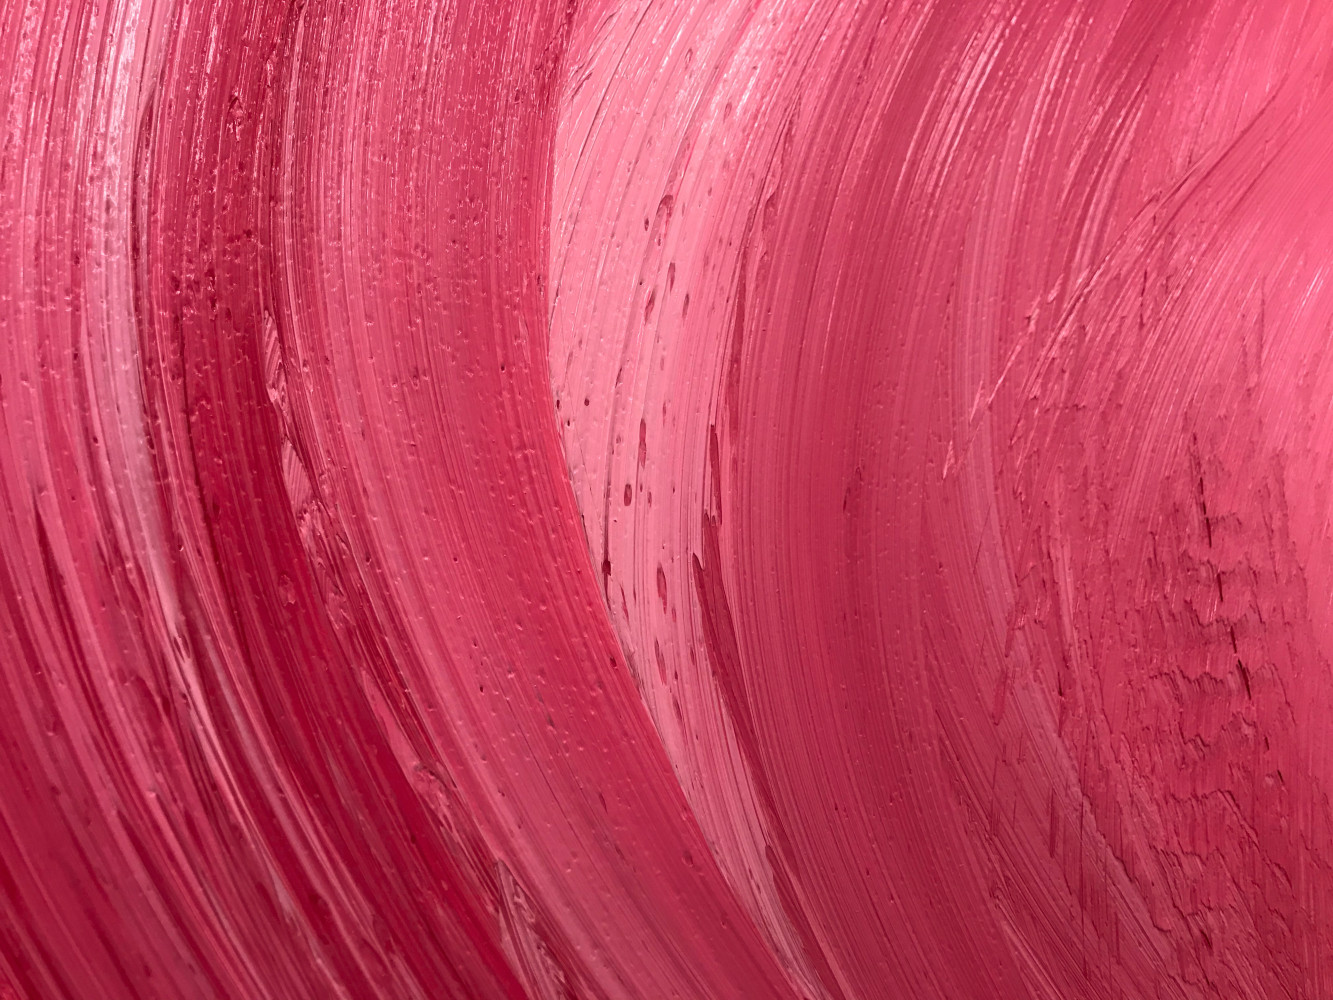 Jason Martin, ‘Untitled (Brilliant pink / Mixed white) (detail)’, 2020, Oil on aluminium